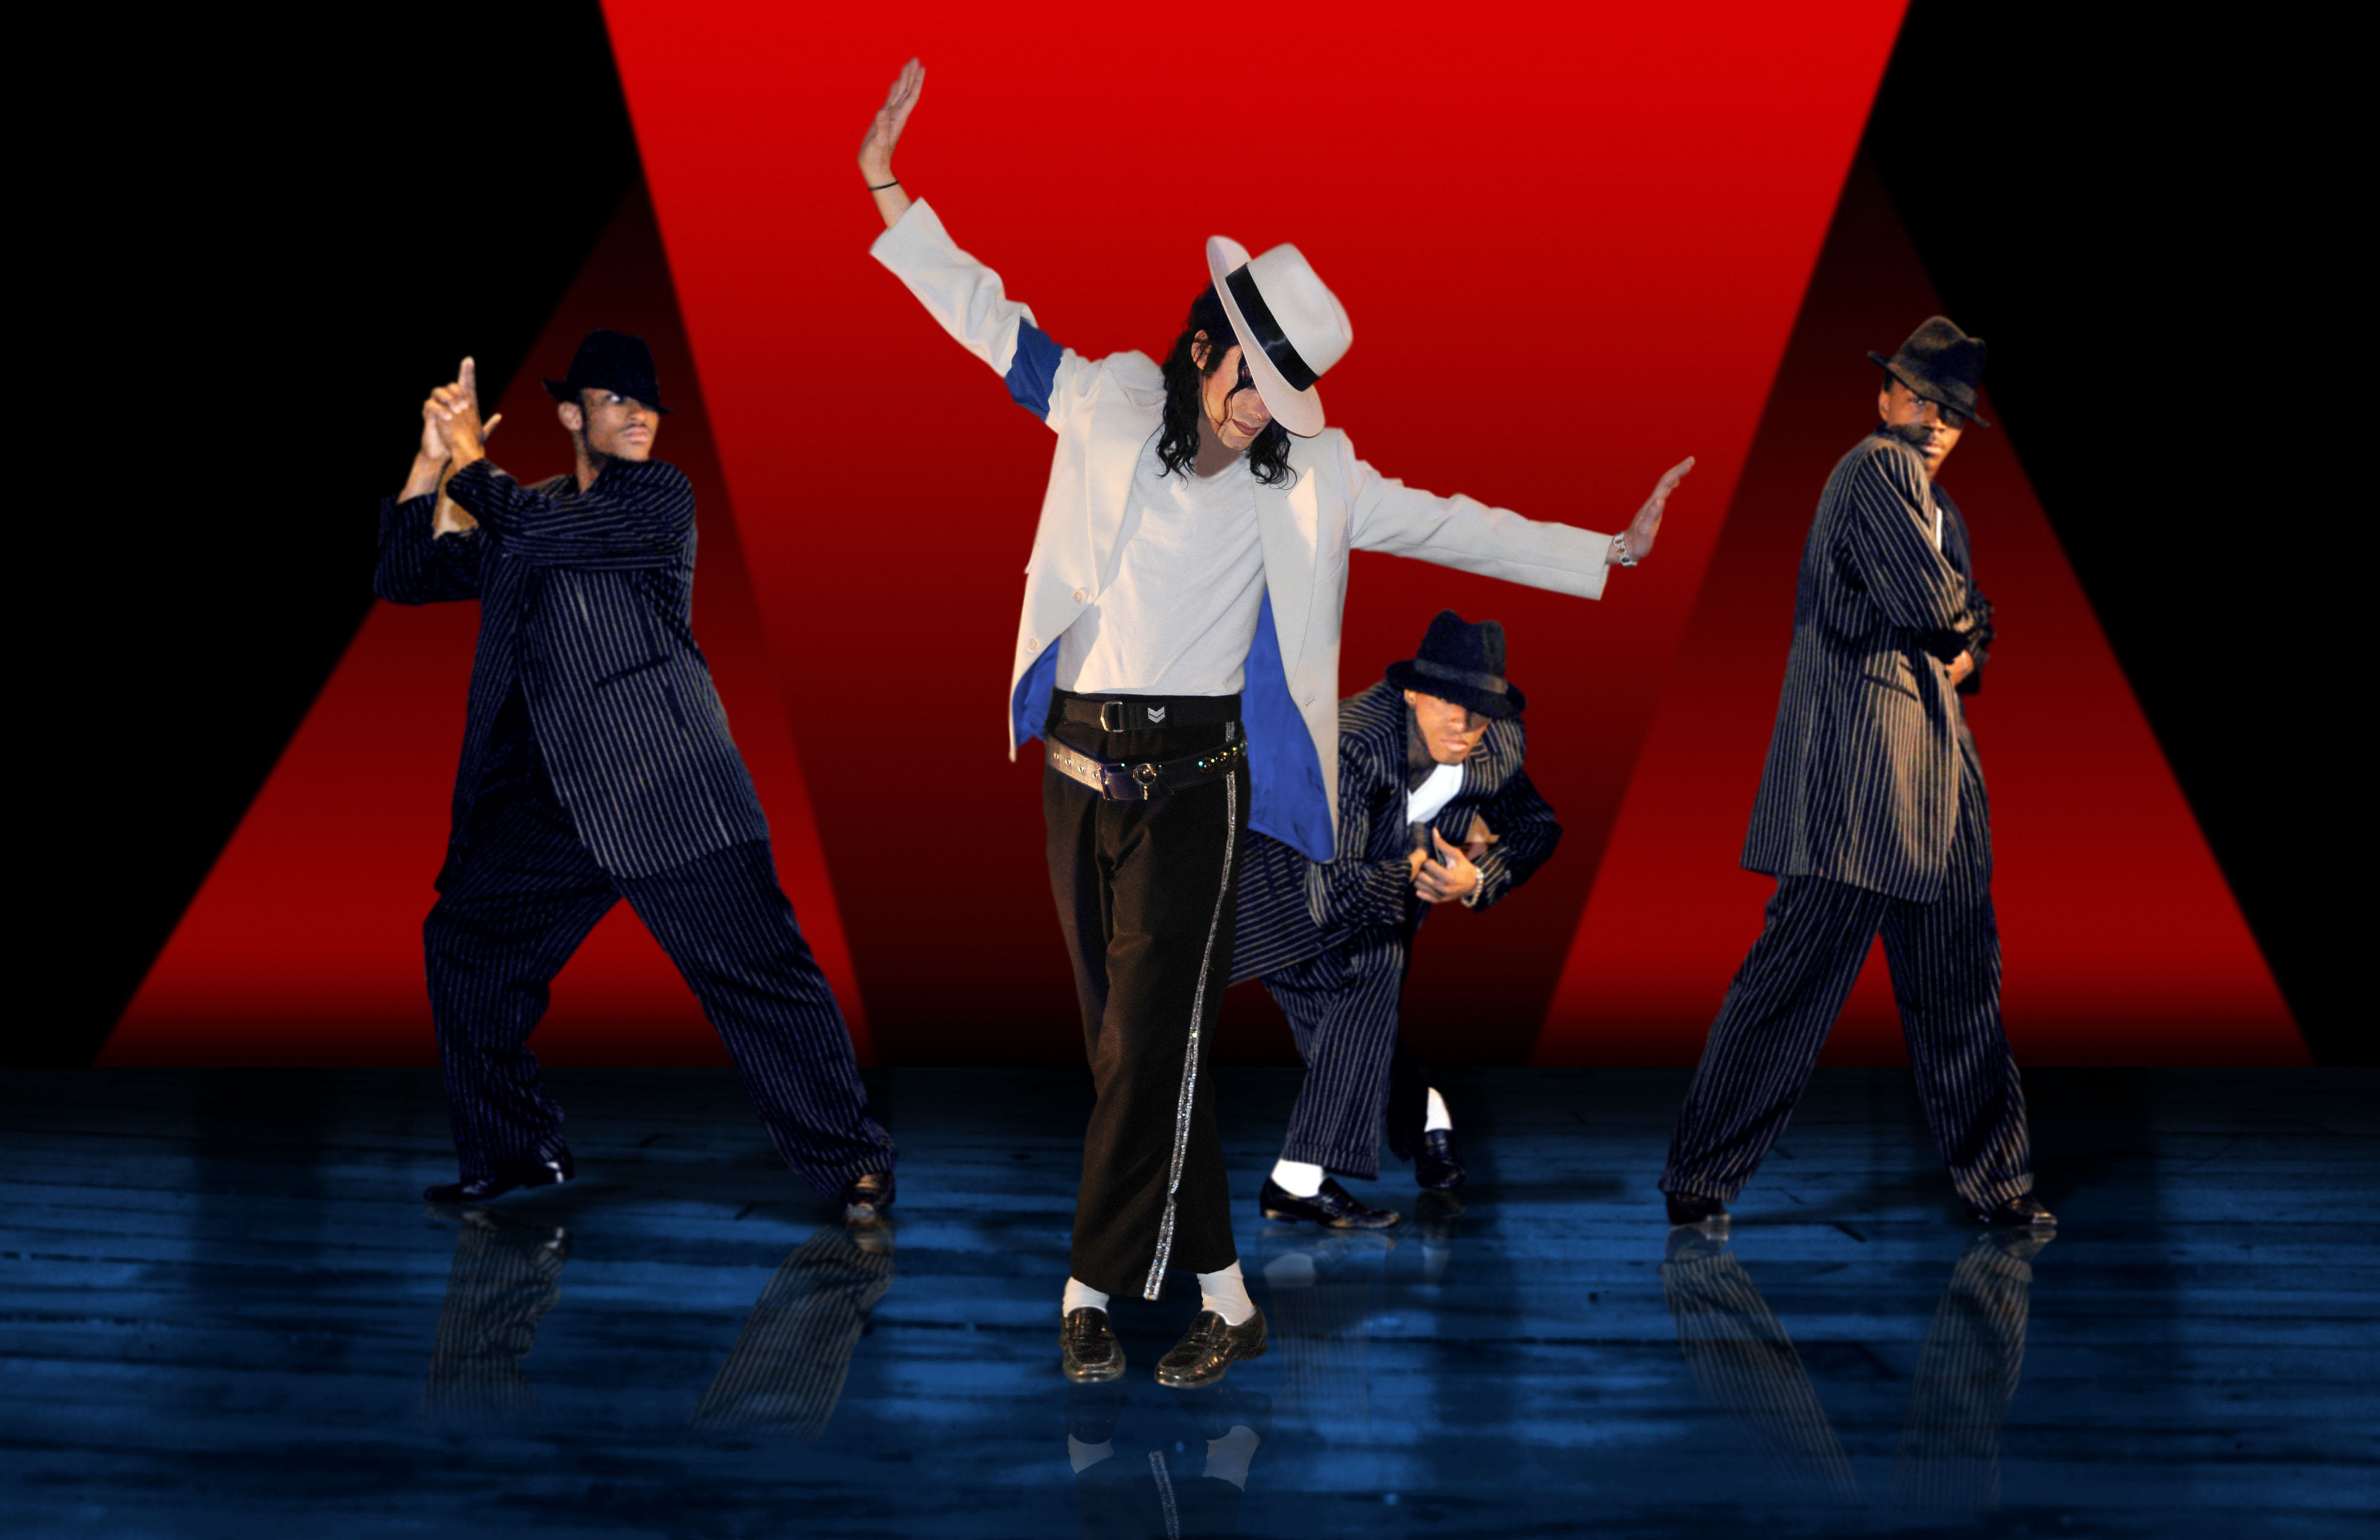 Michael jackson dancing. Шоу Майкла Джексона. Michael Jackson Dance pic.